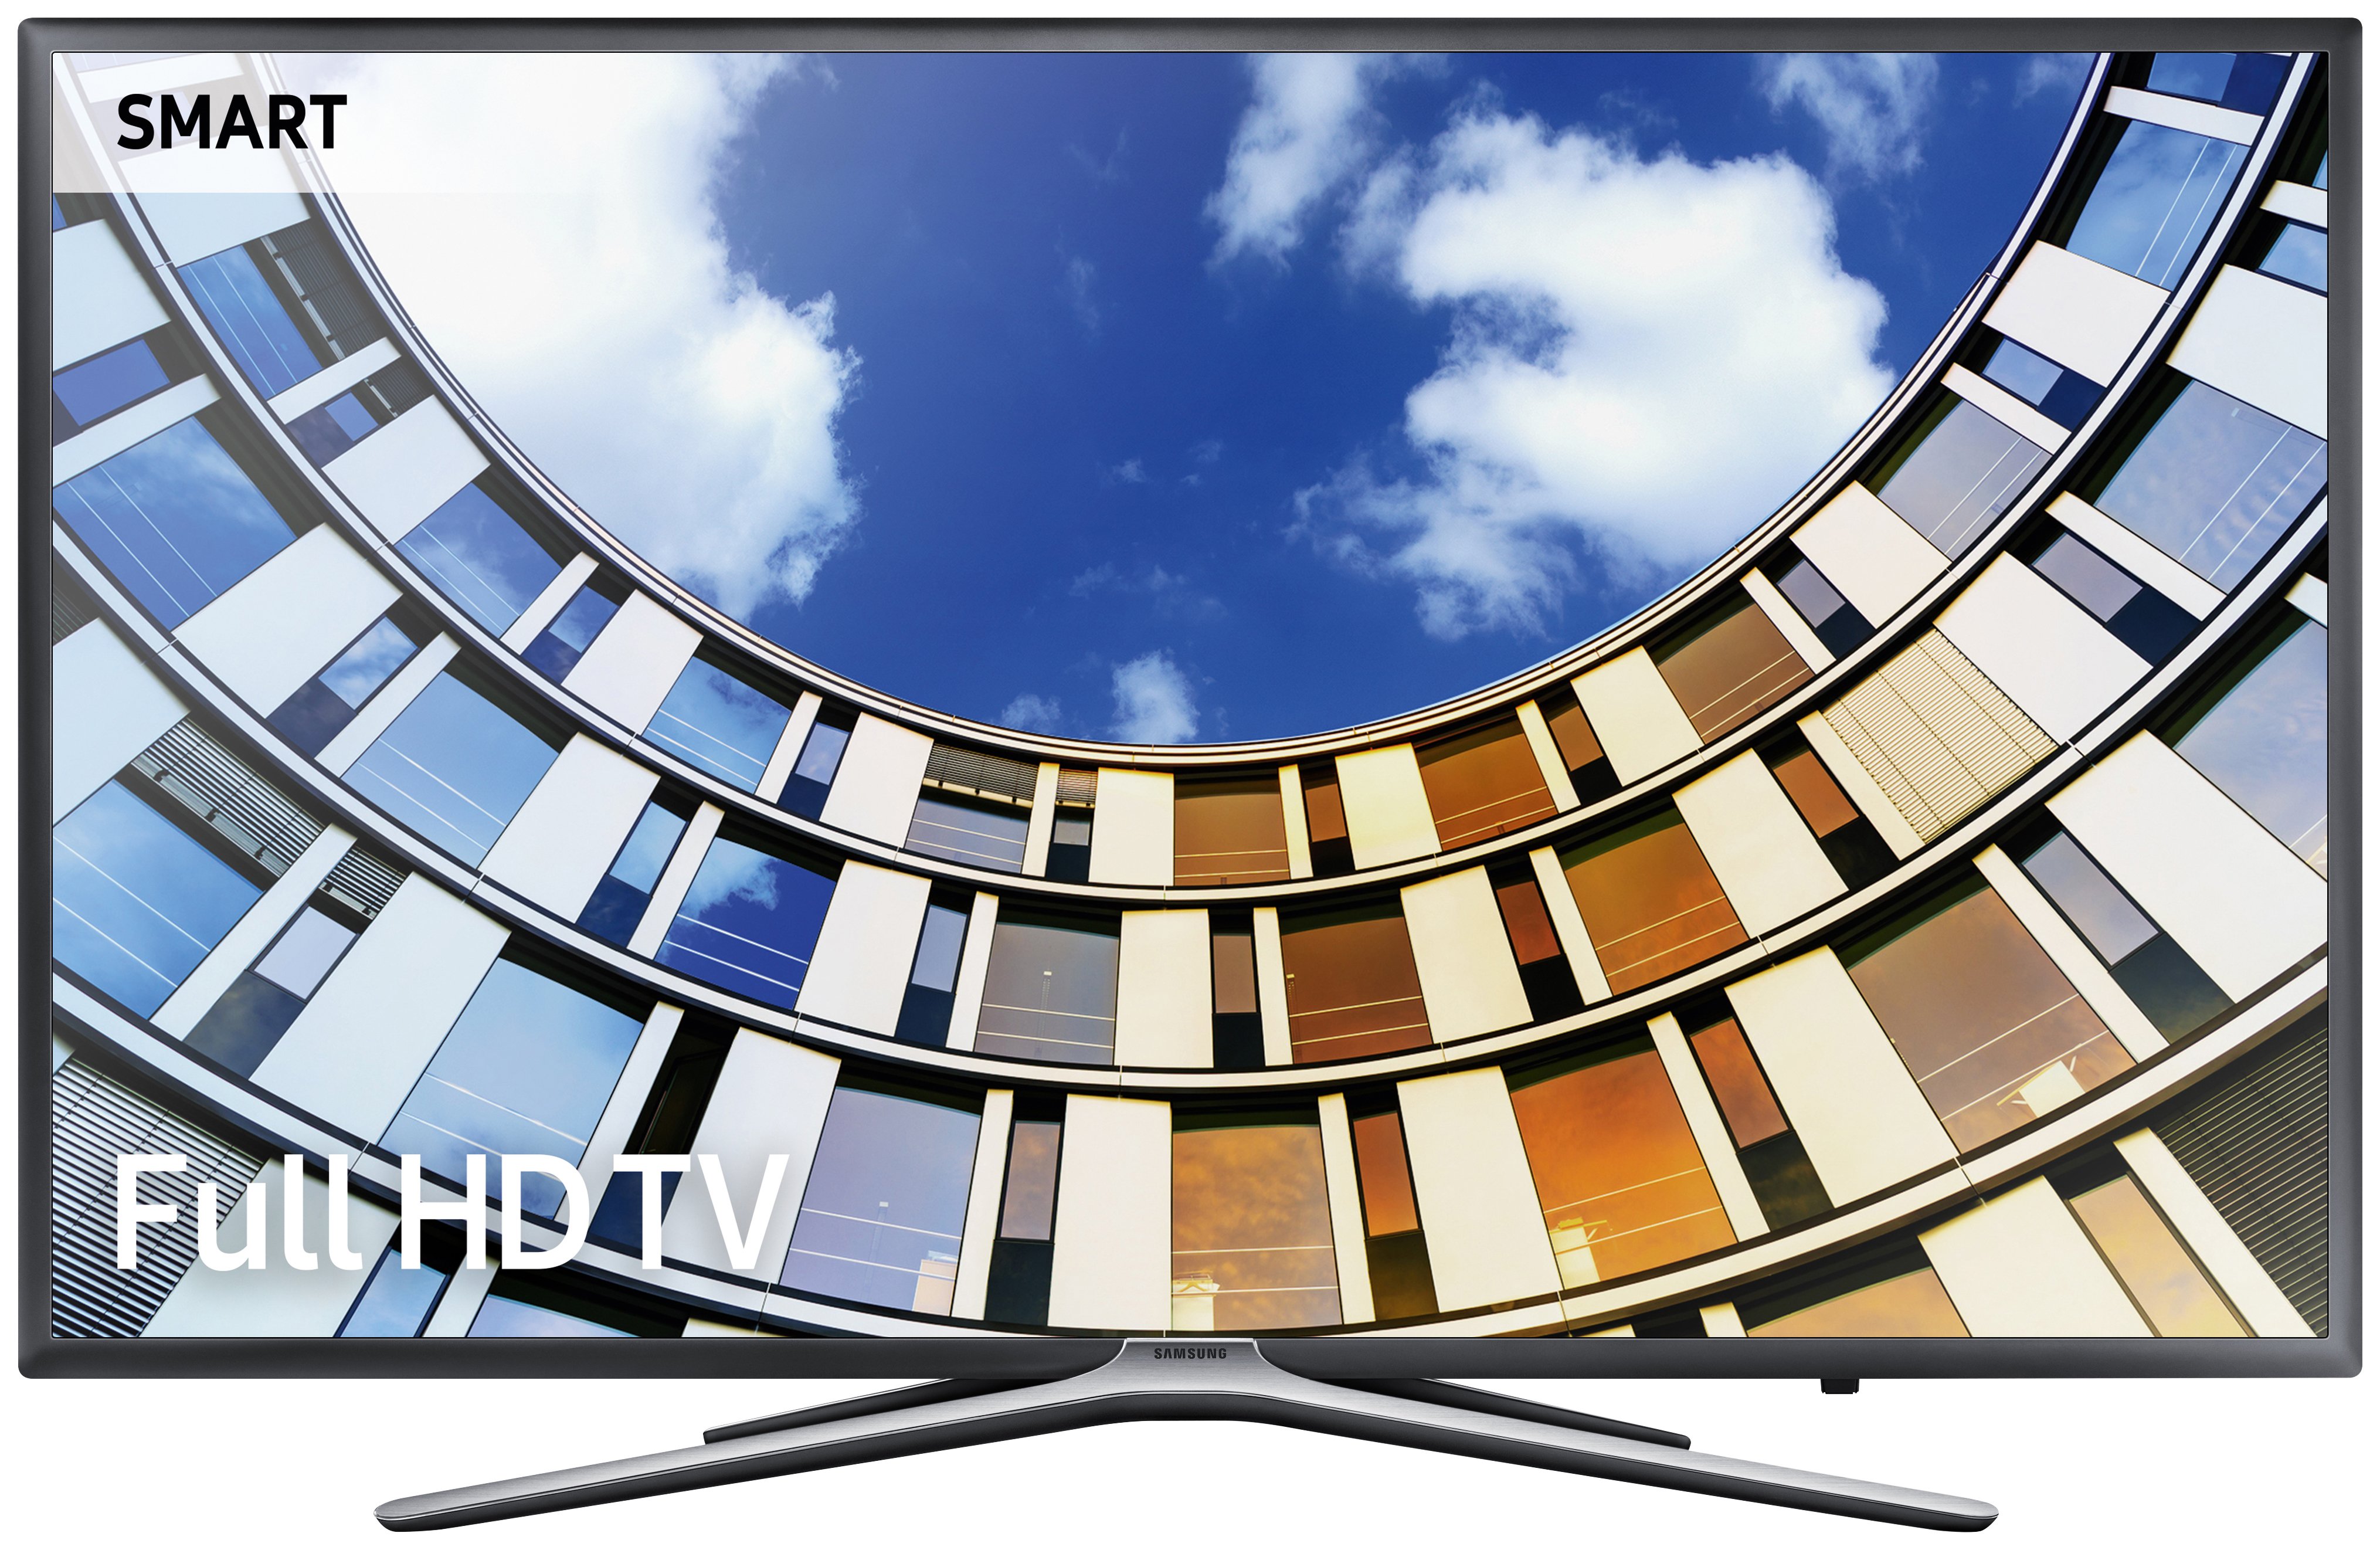 Samsung 49M5520 49 Inch Smart Full HD TV